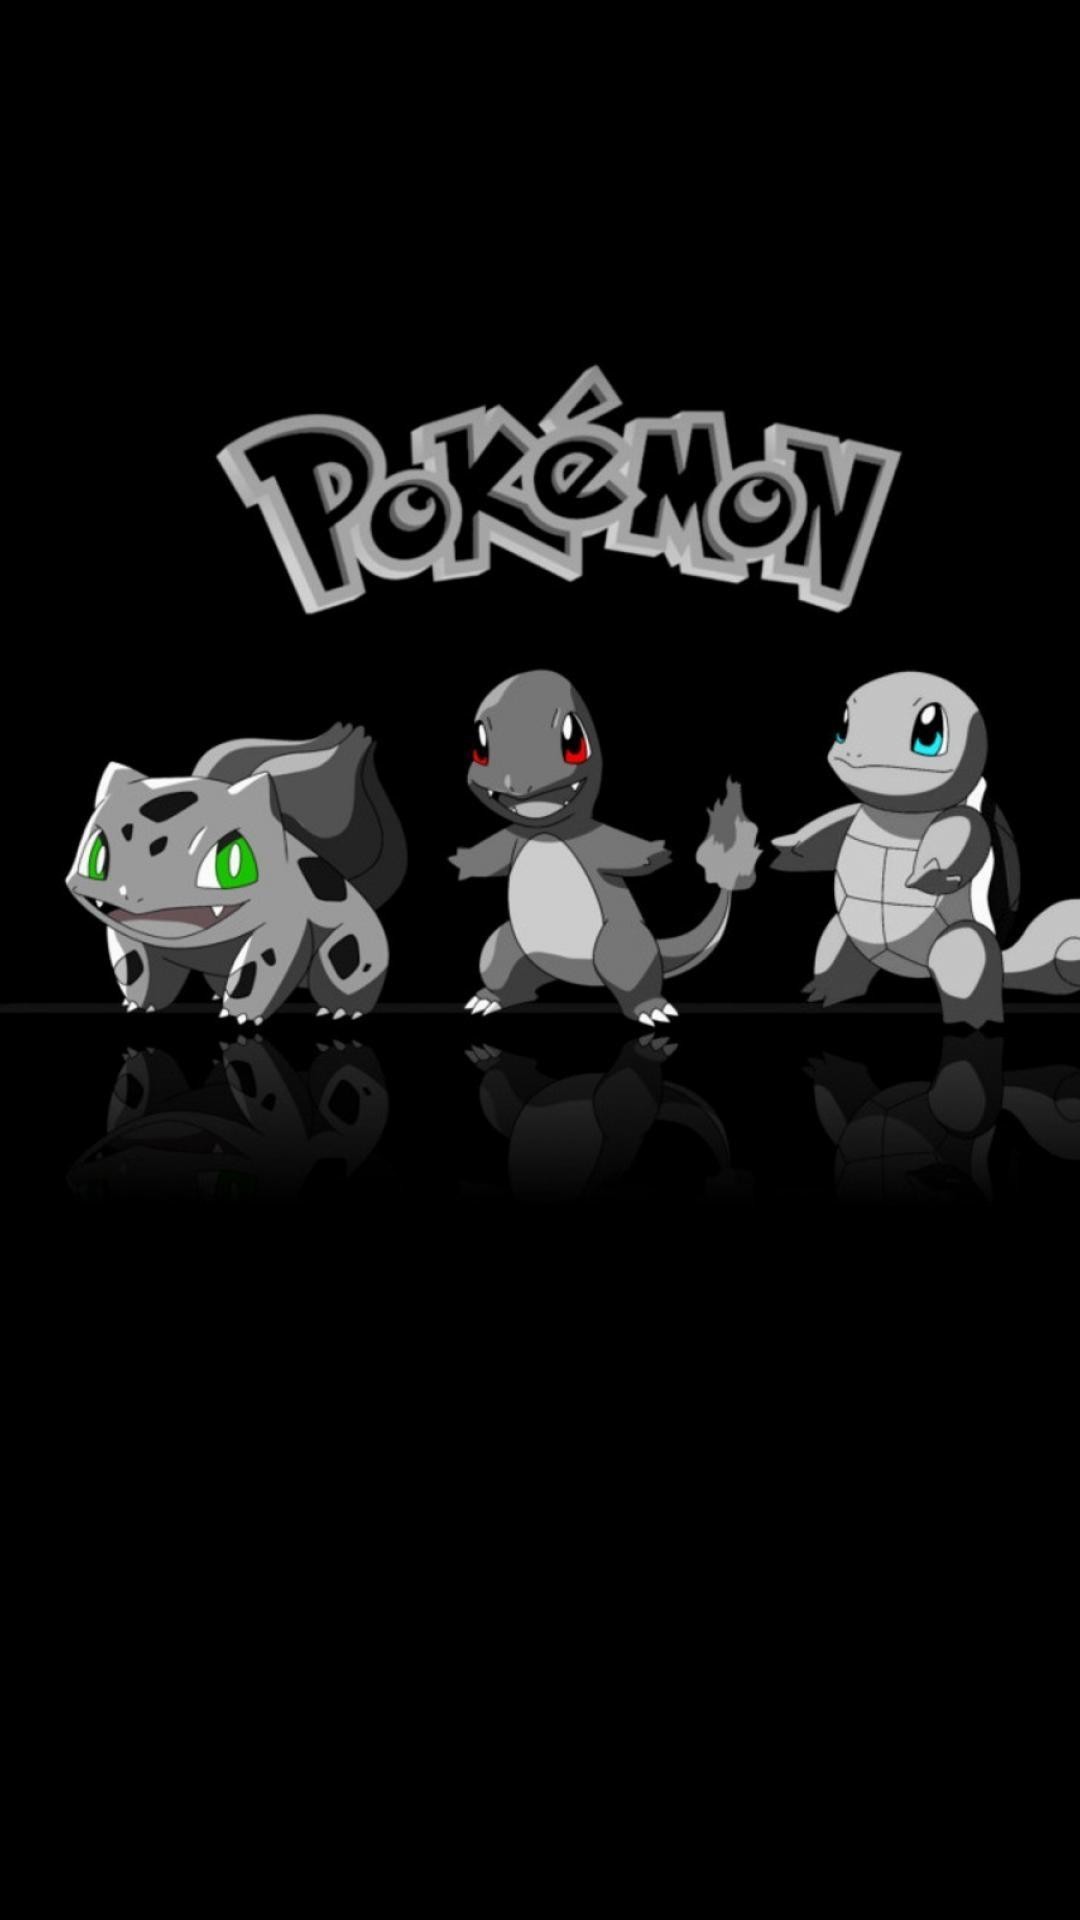 Pokemon wallpaper 1920×1080 black and white iphone 6